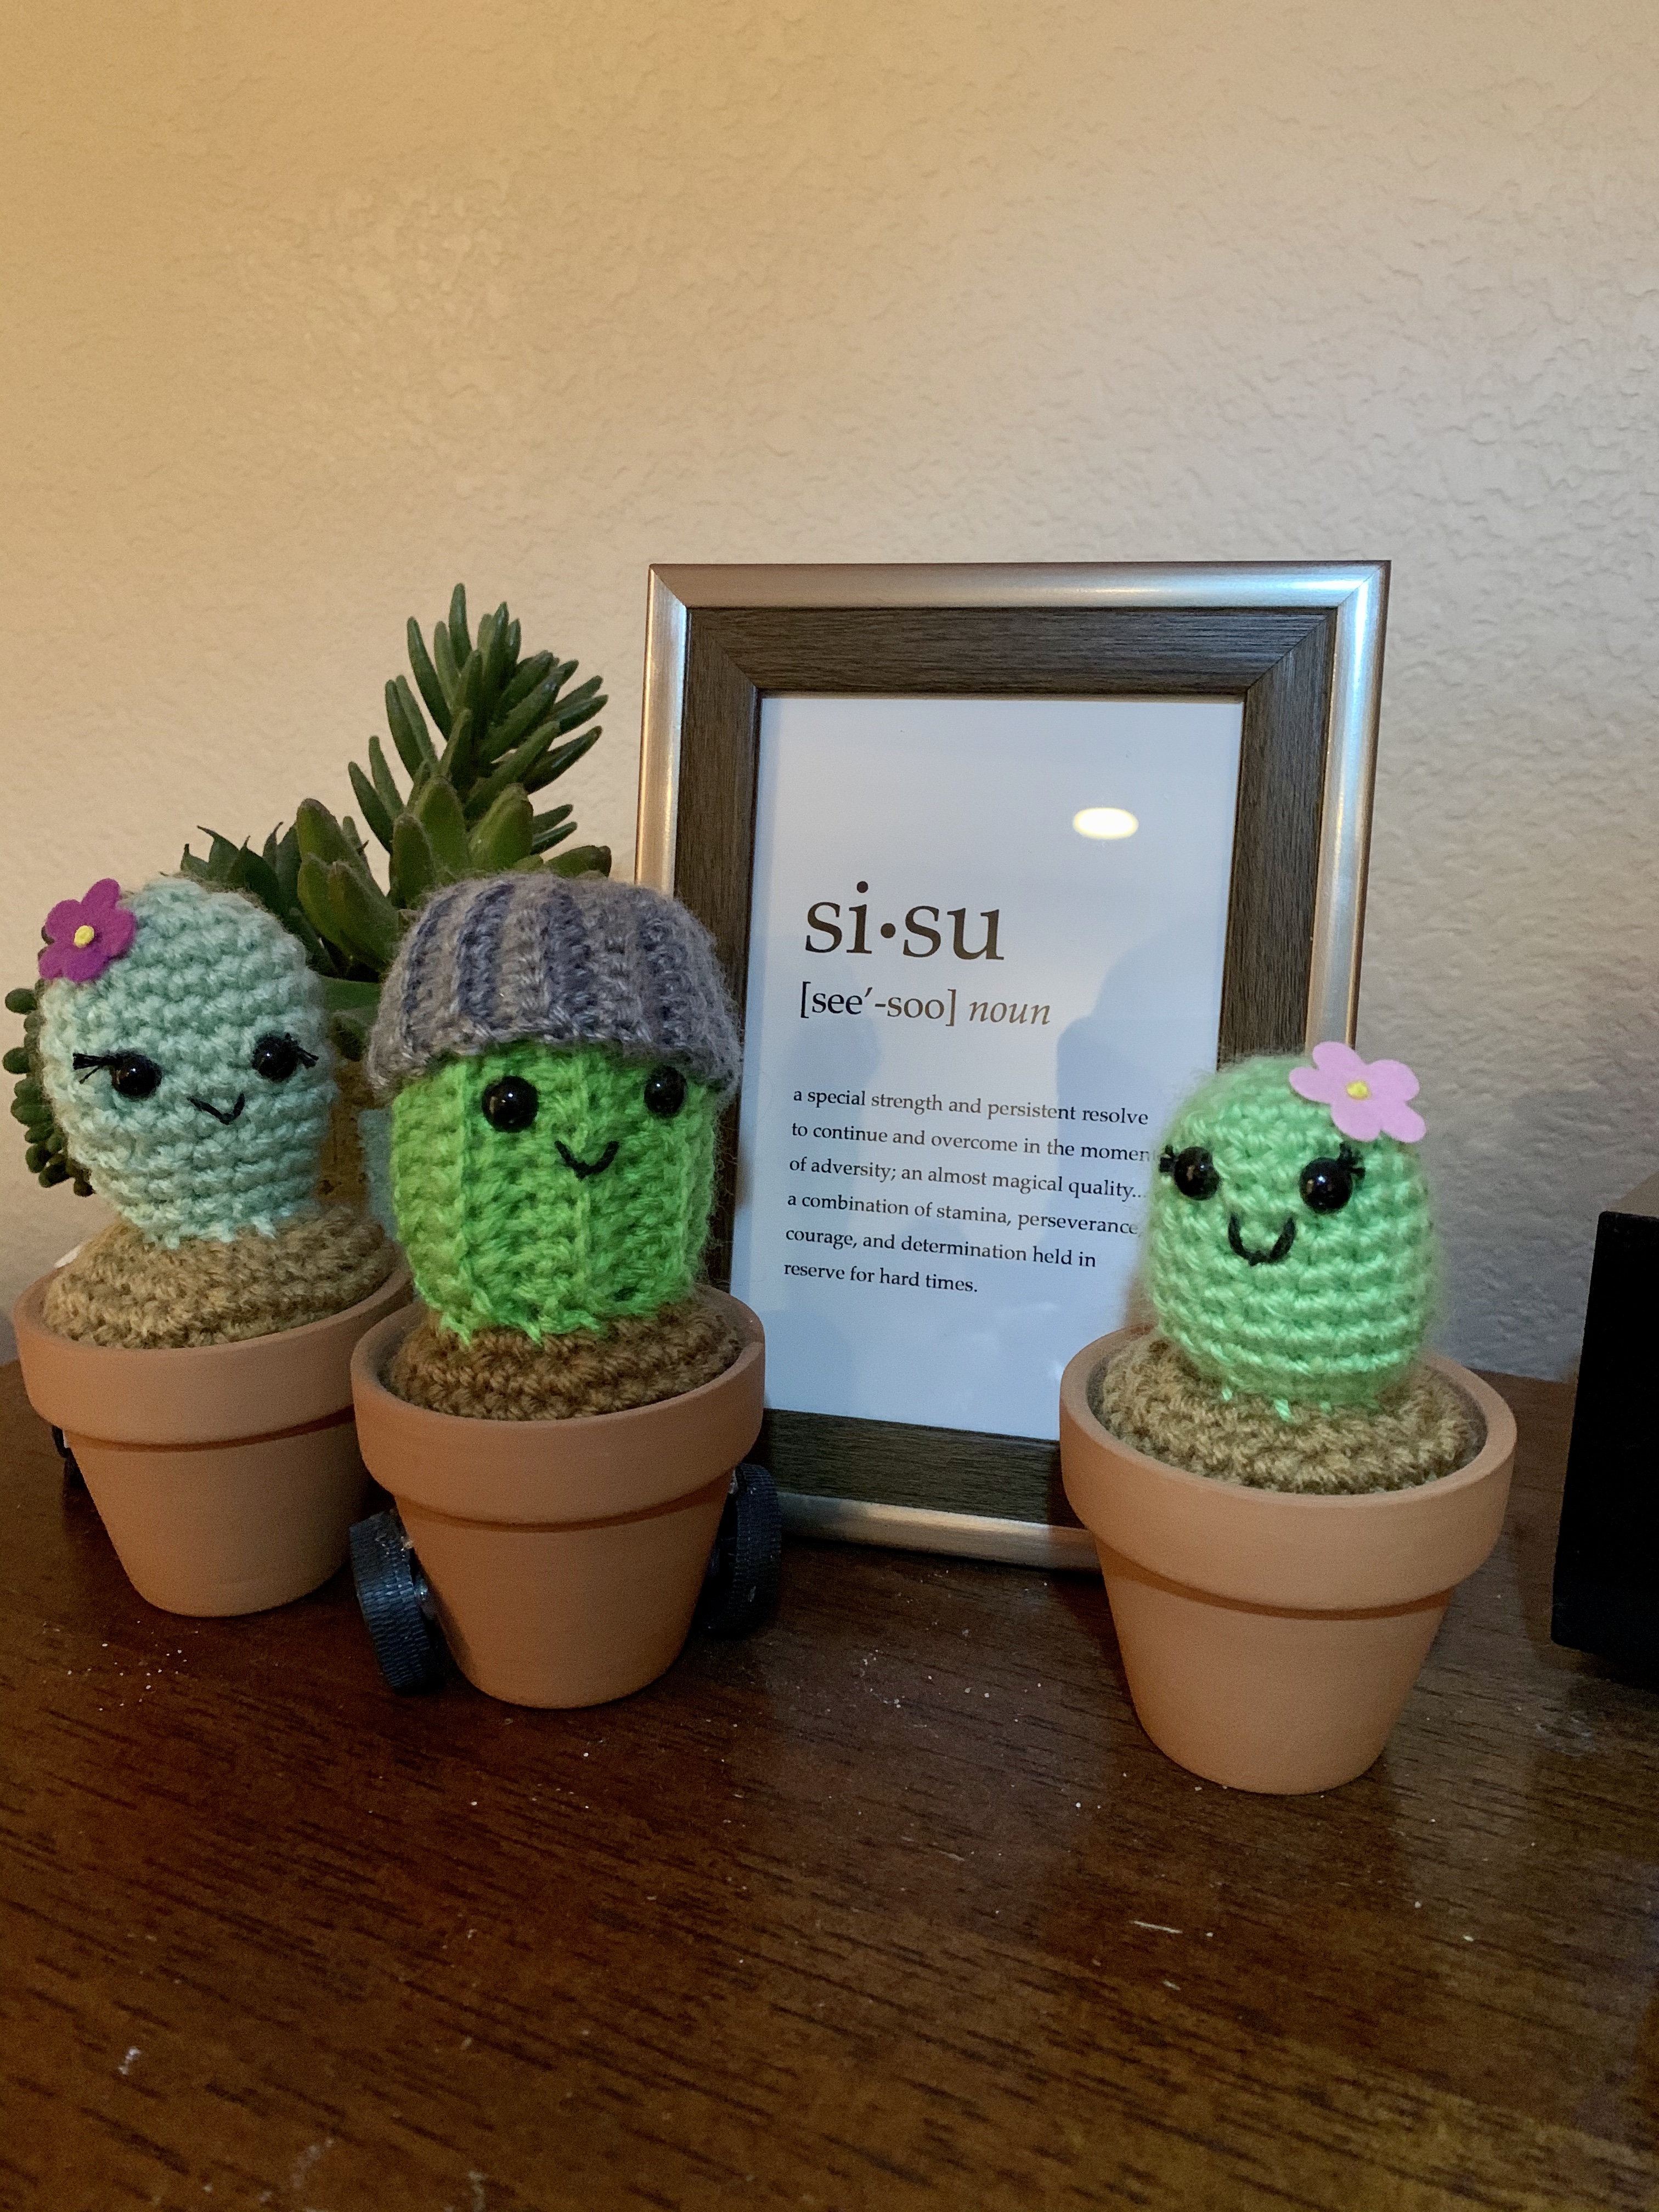 Sisu print next to crocheted cactus on a shelf.